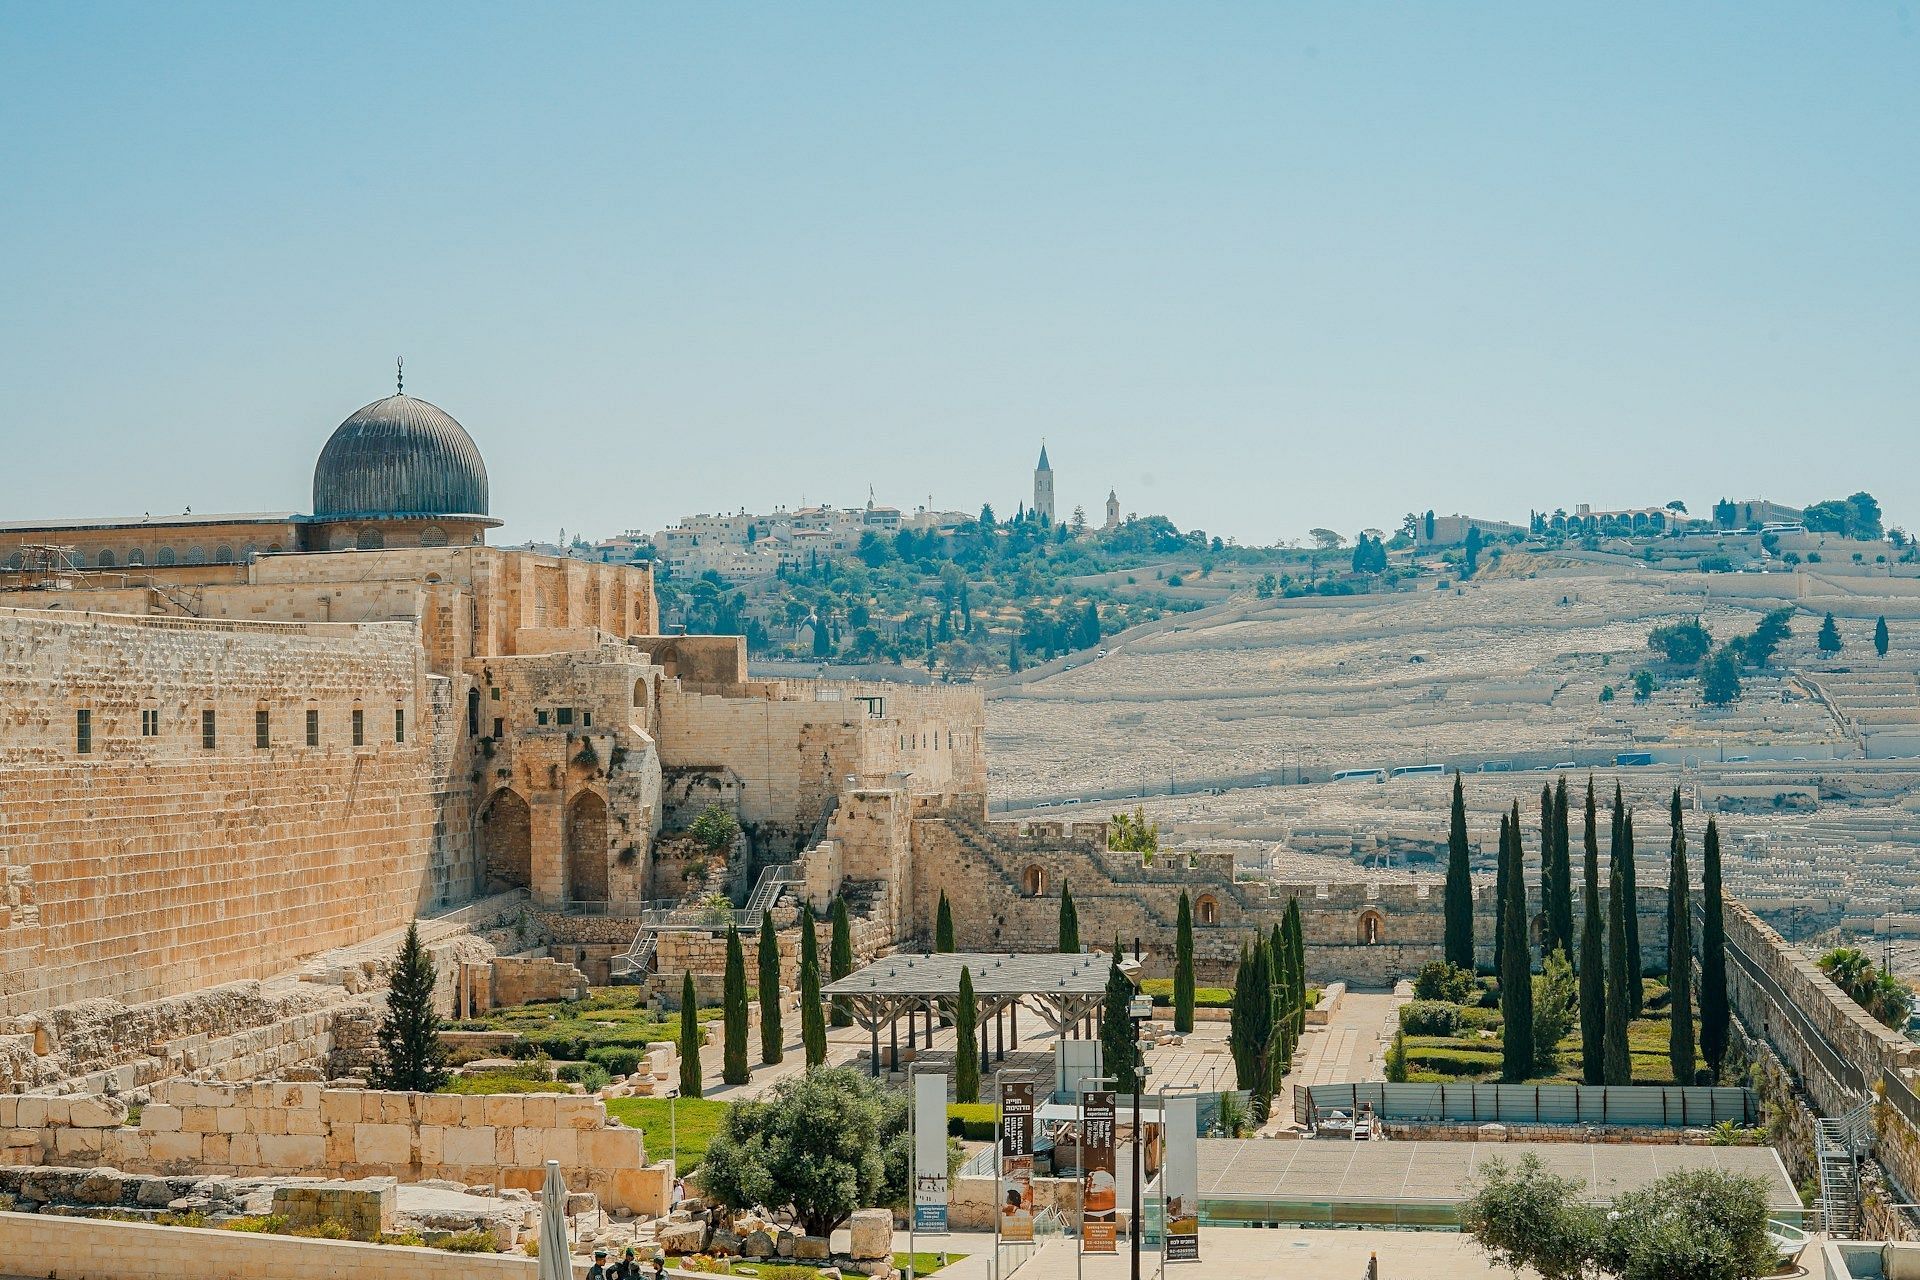 Some parts of The Book of Clarence were shot in Jerusalem, Israel (Image via Unsplash/Toa Heftiba)